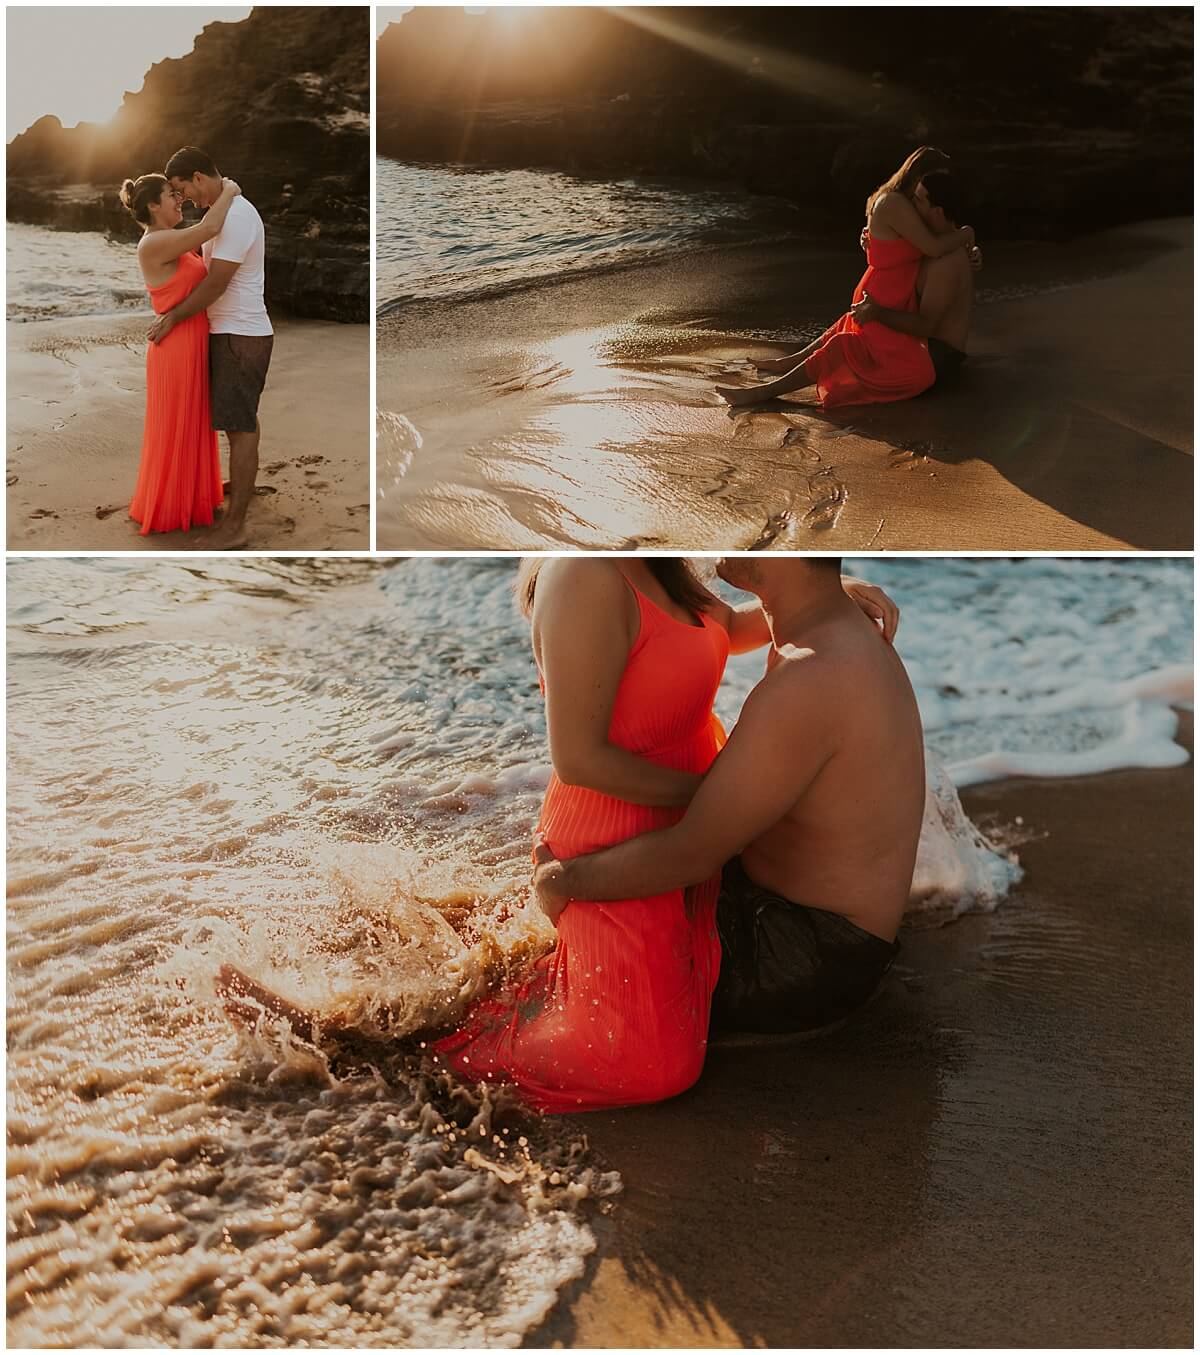 water splashing man and woman during island sunrise date session wearing long red dress 